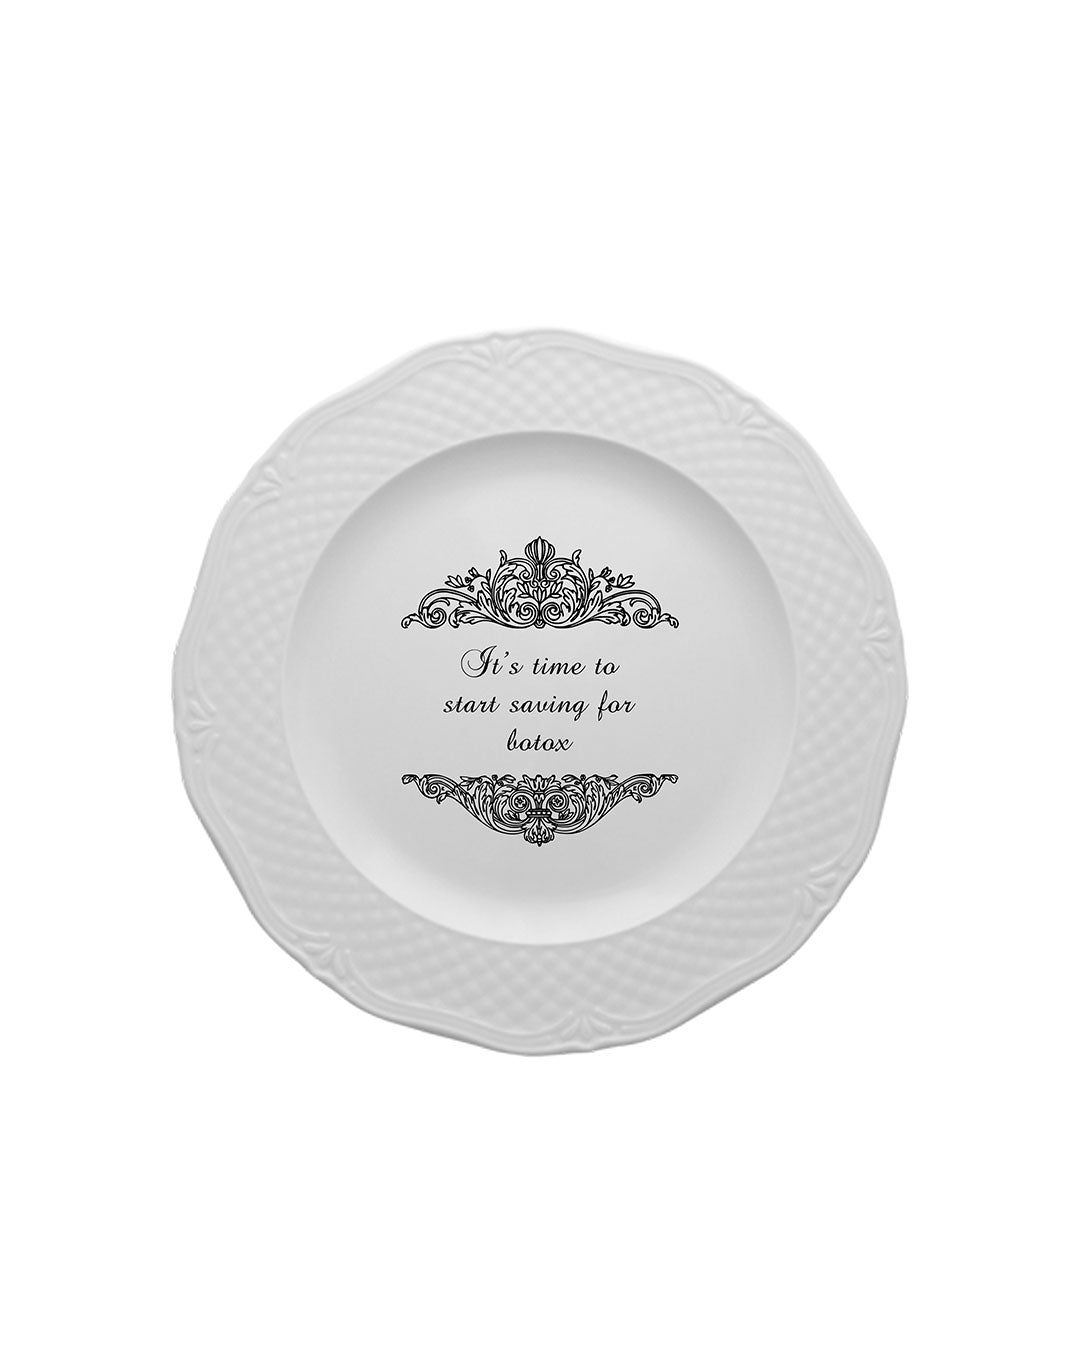 L'amour collection dessert plates MIX - Set of 4 (-25%) - ACTOS